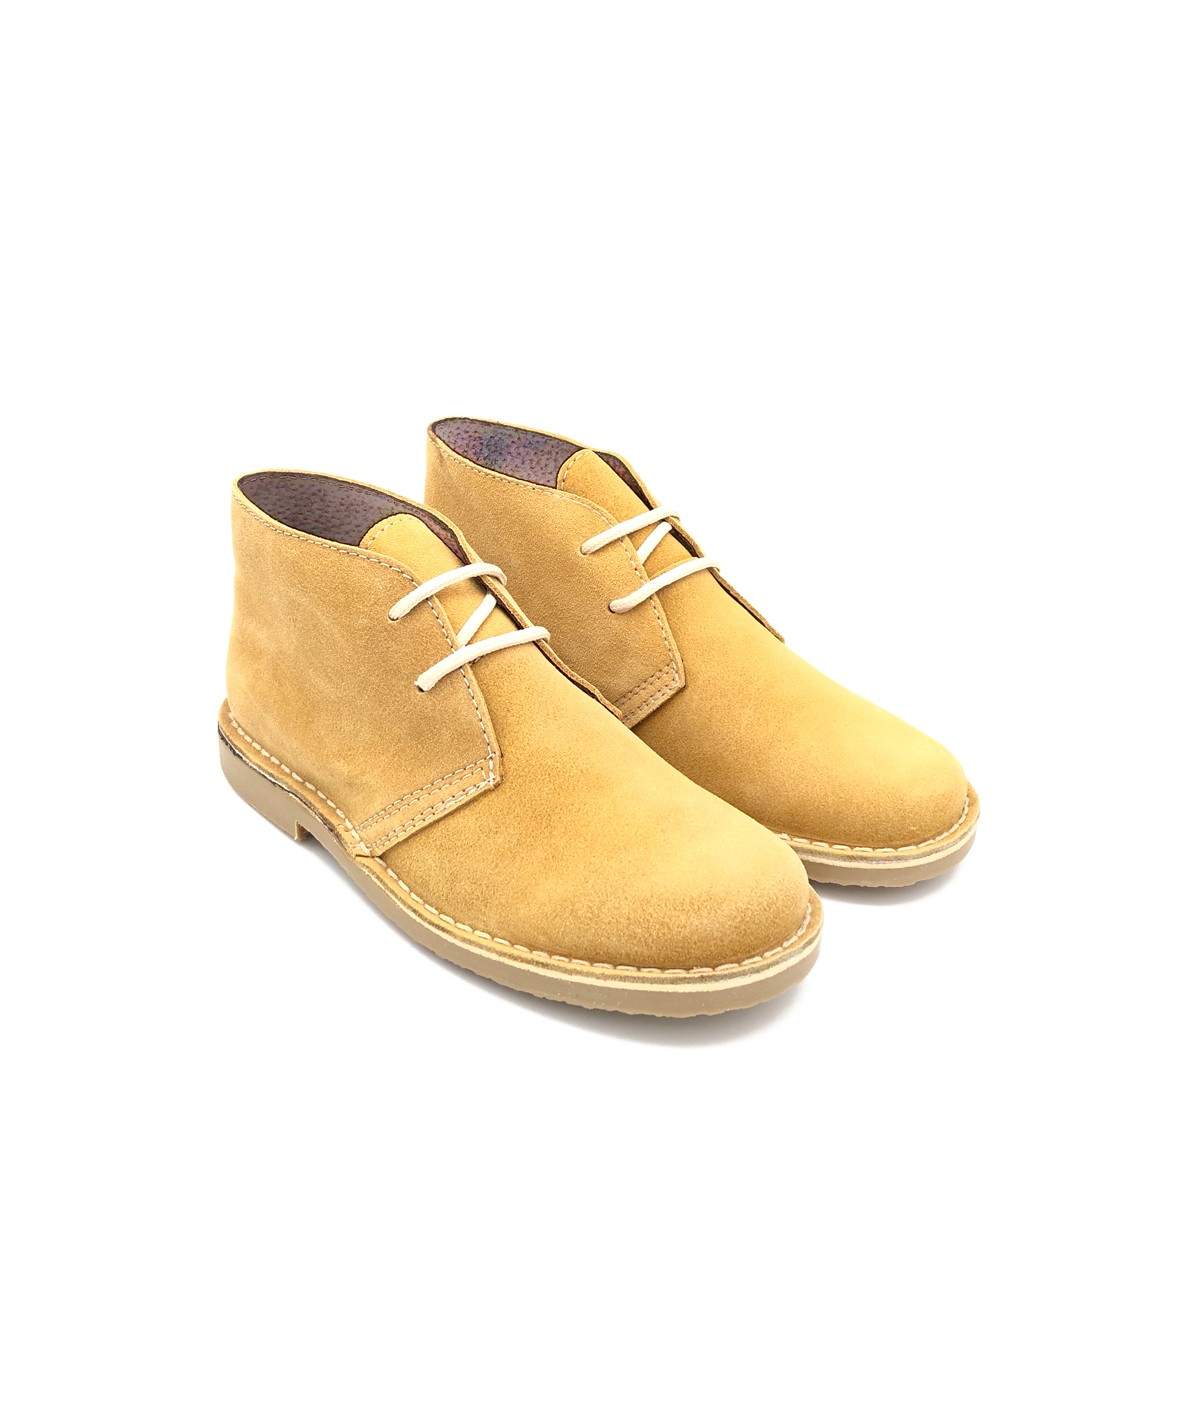 Men's honey color desert boots